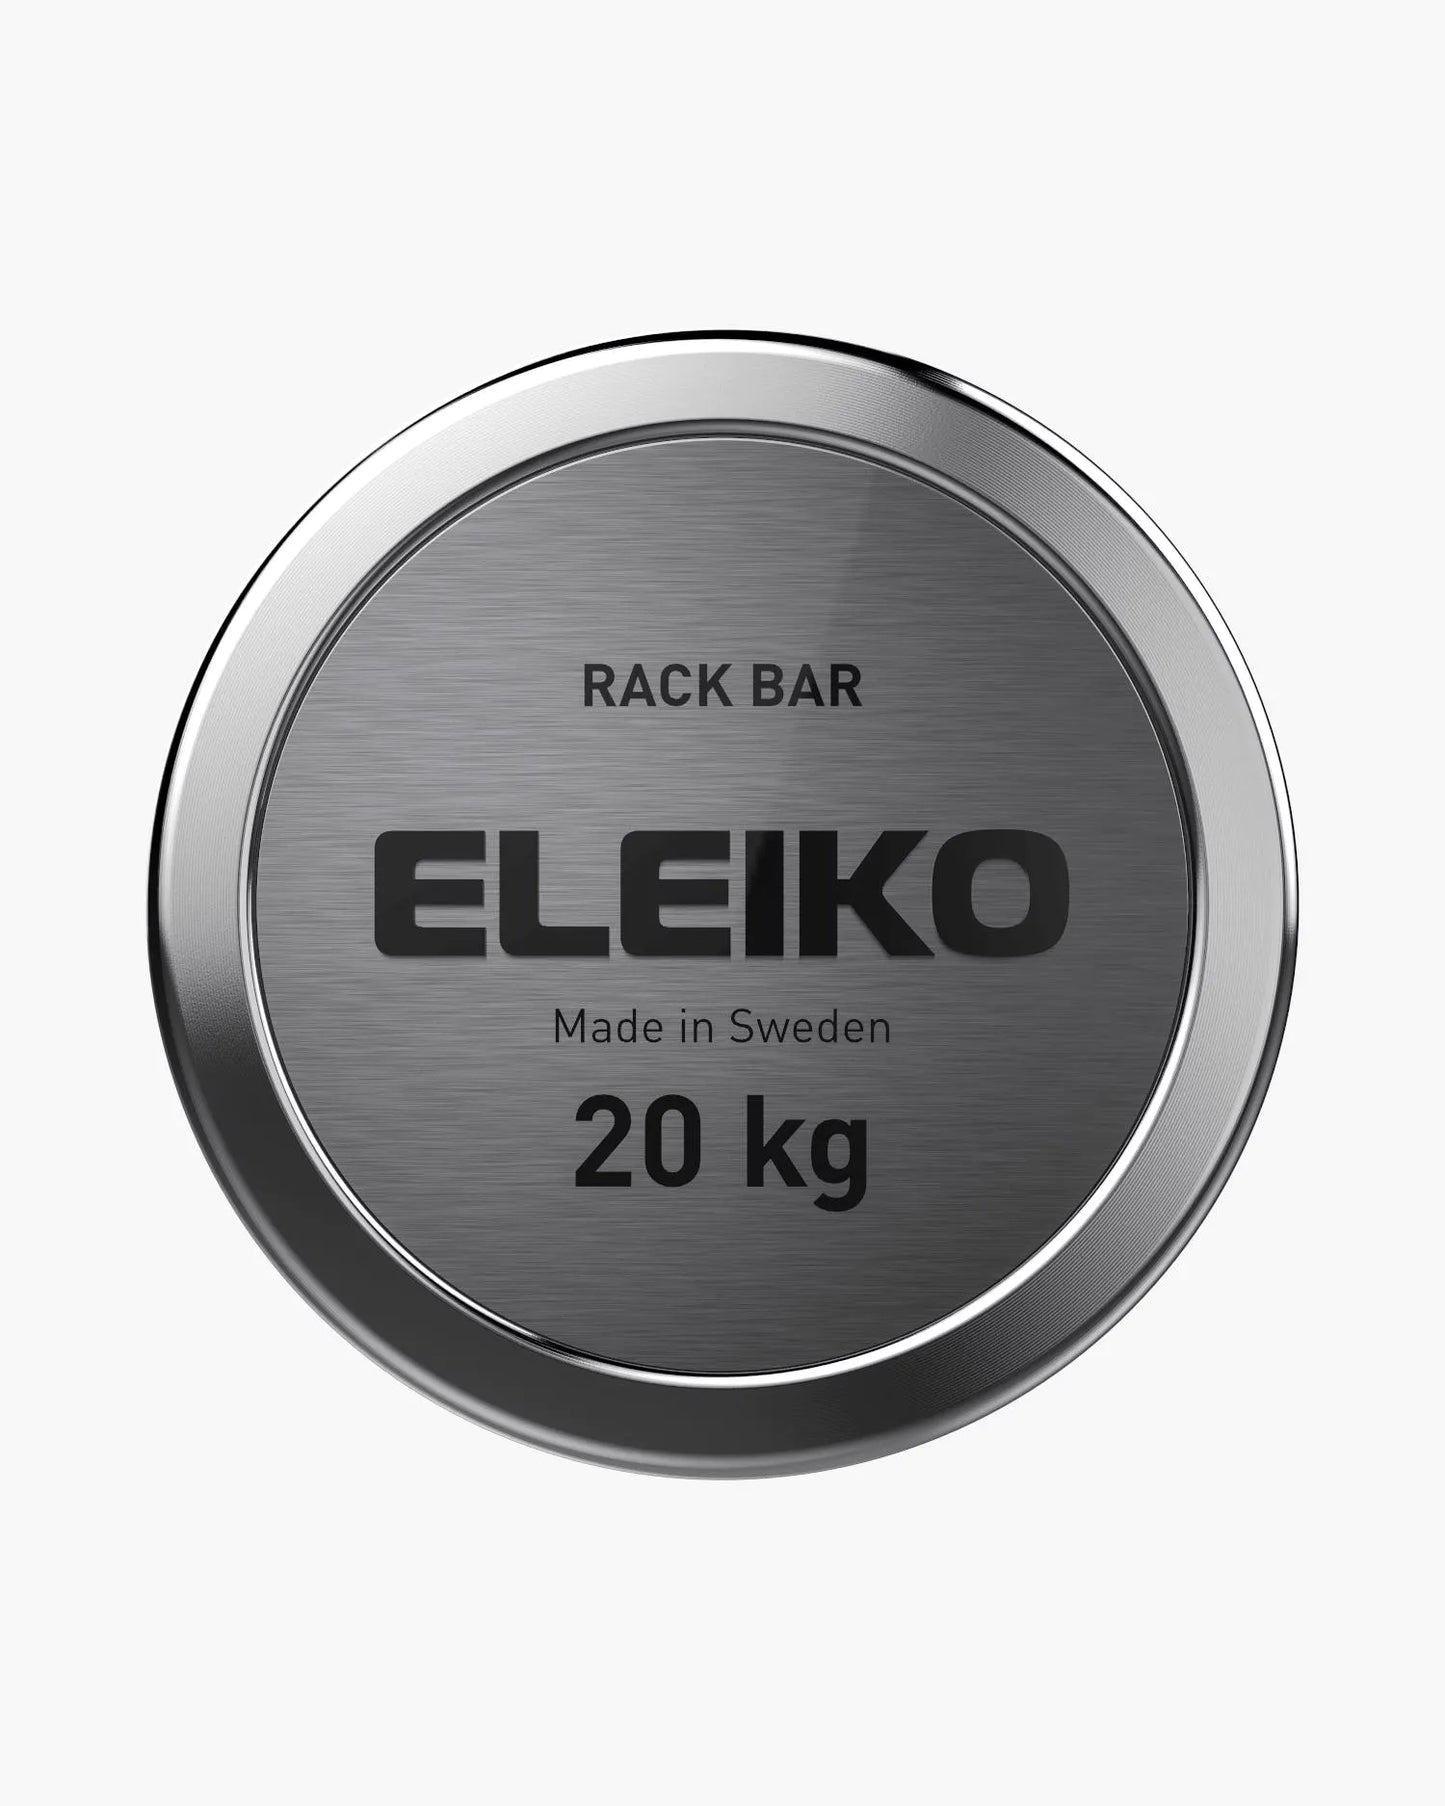 Eleiko Rack Bar 20Kg